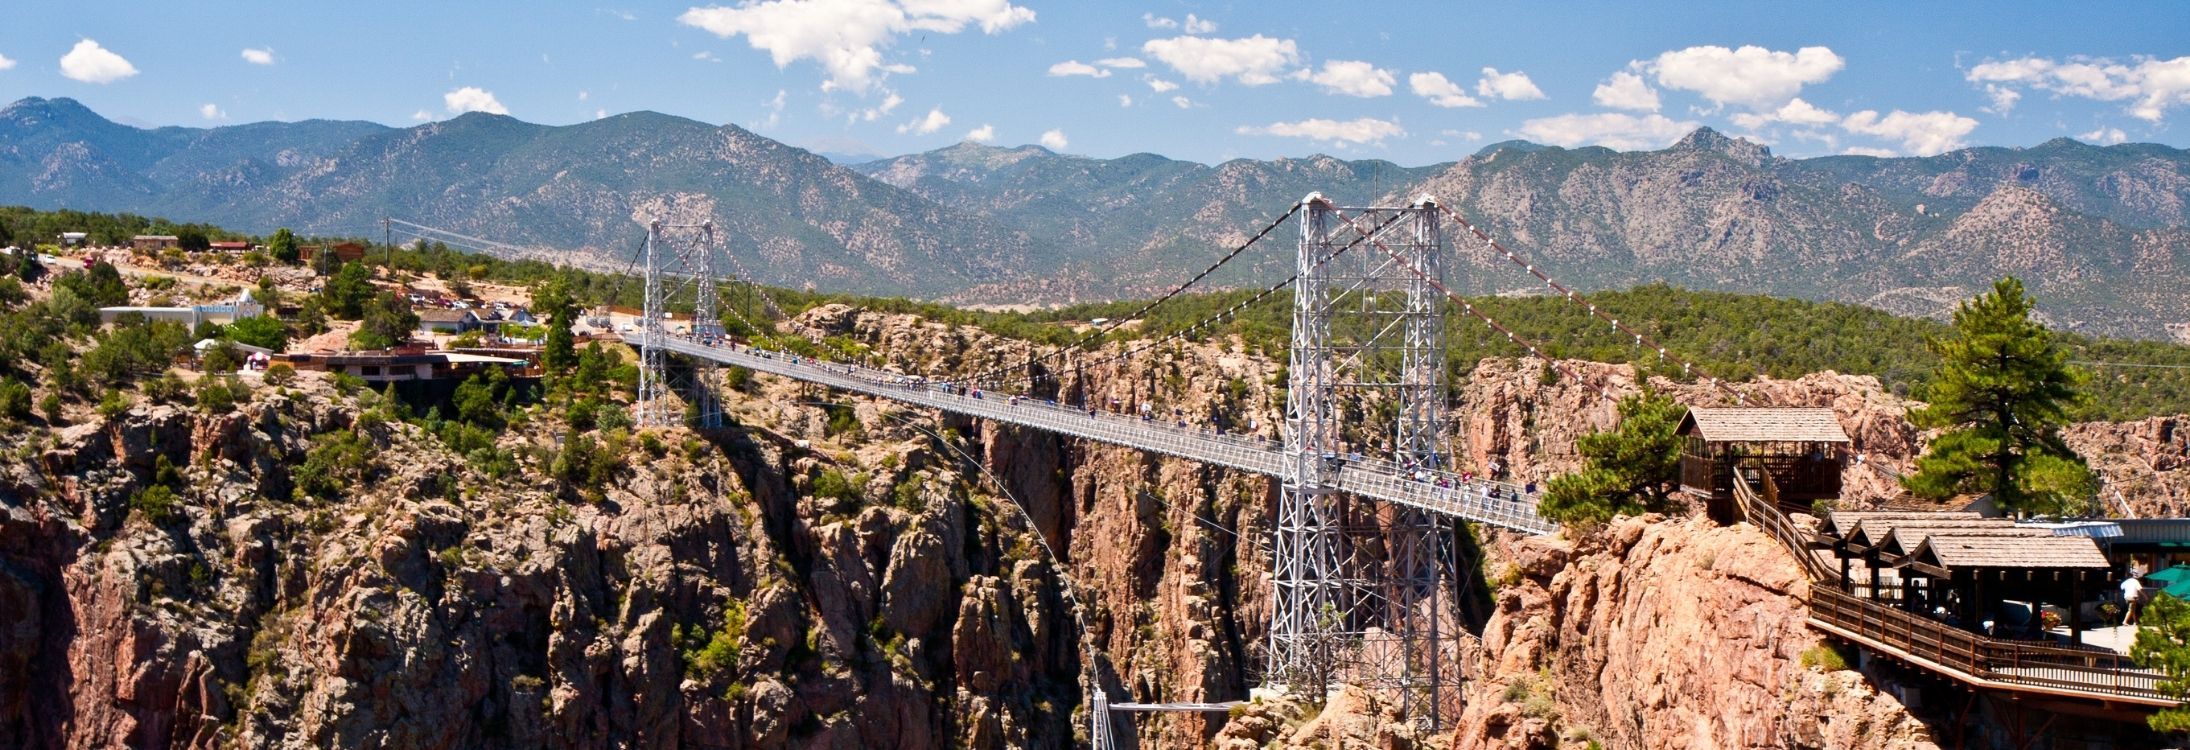 Royal Gorge Bridge - Colorado, USA